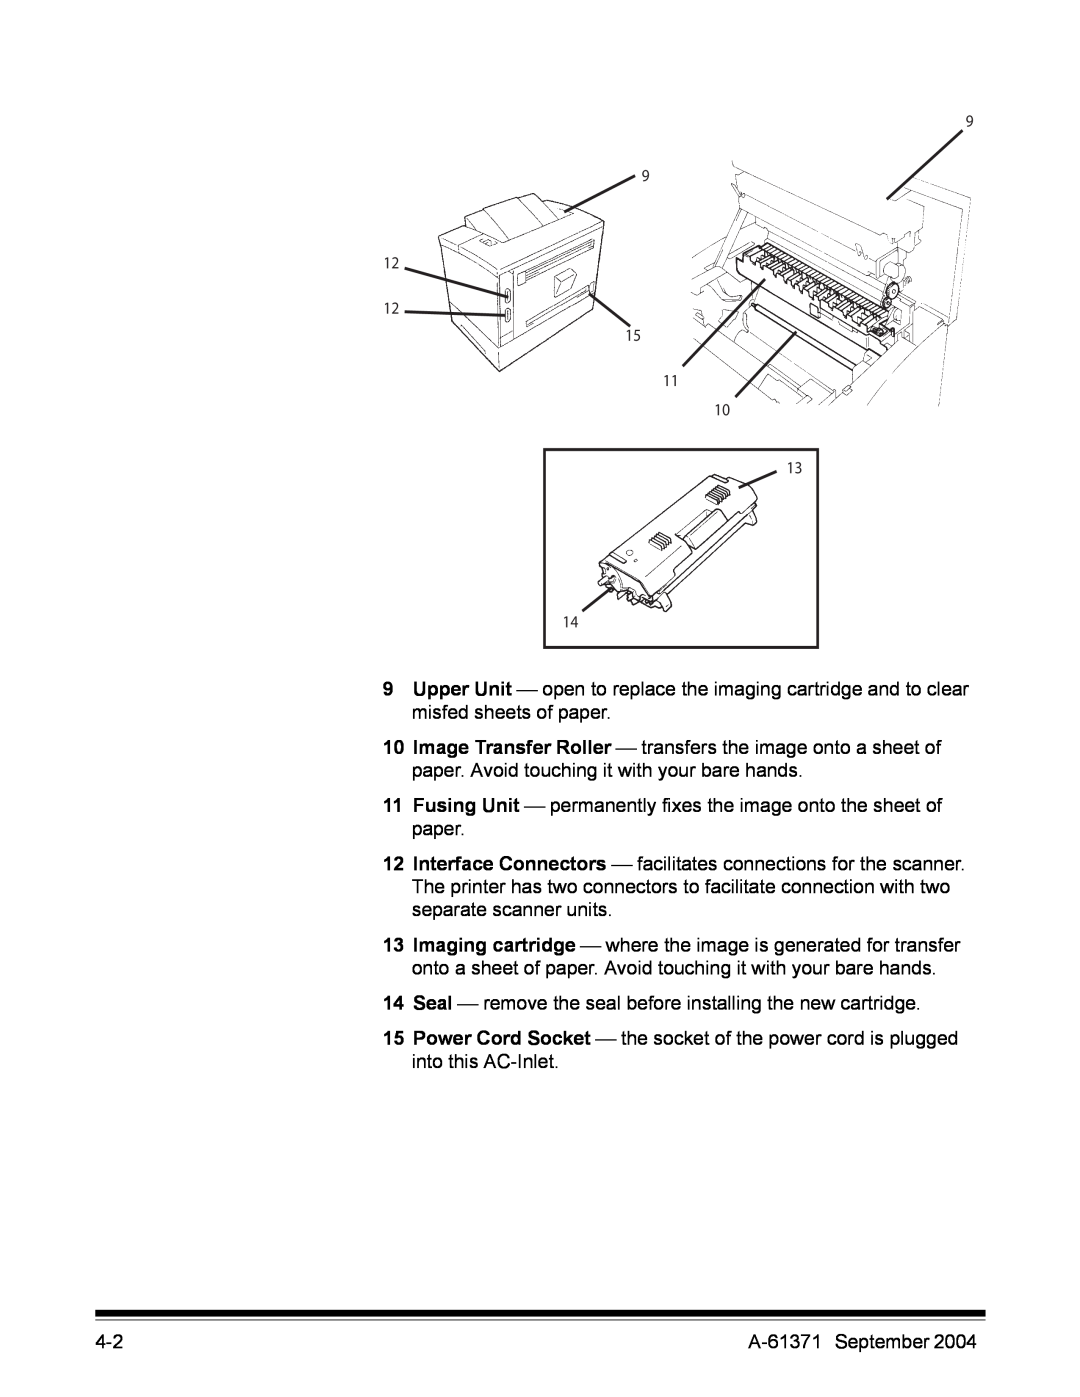 Kodak 3000DSV-E manual Fusing Unit  permanently fixes the image onto the sheet of paper, A-61371 September 